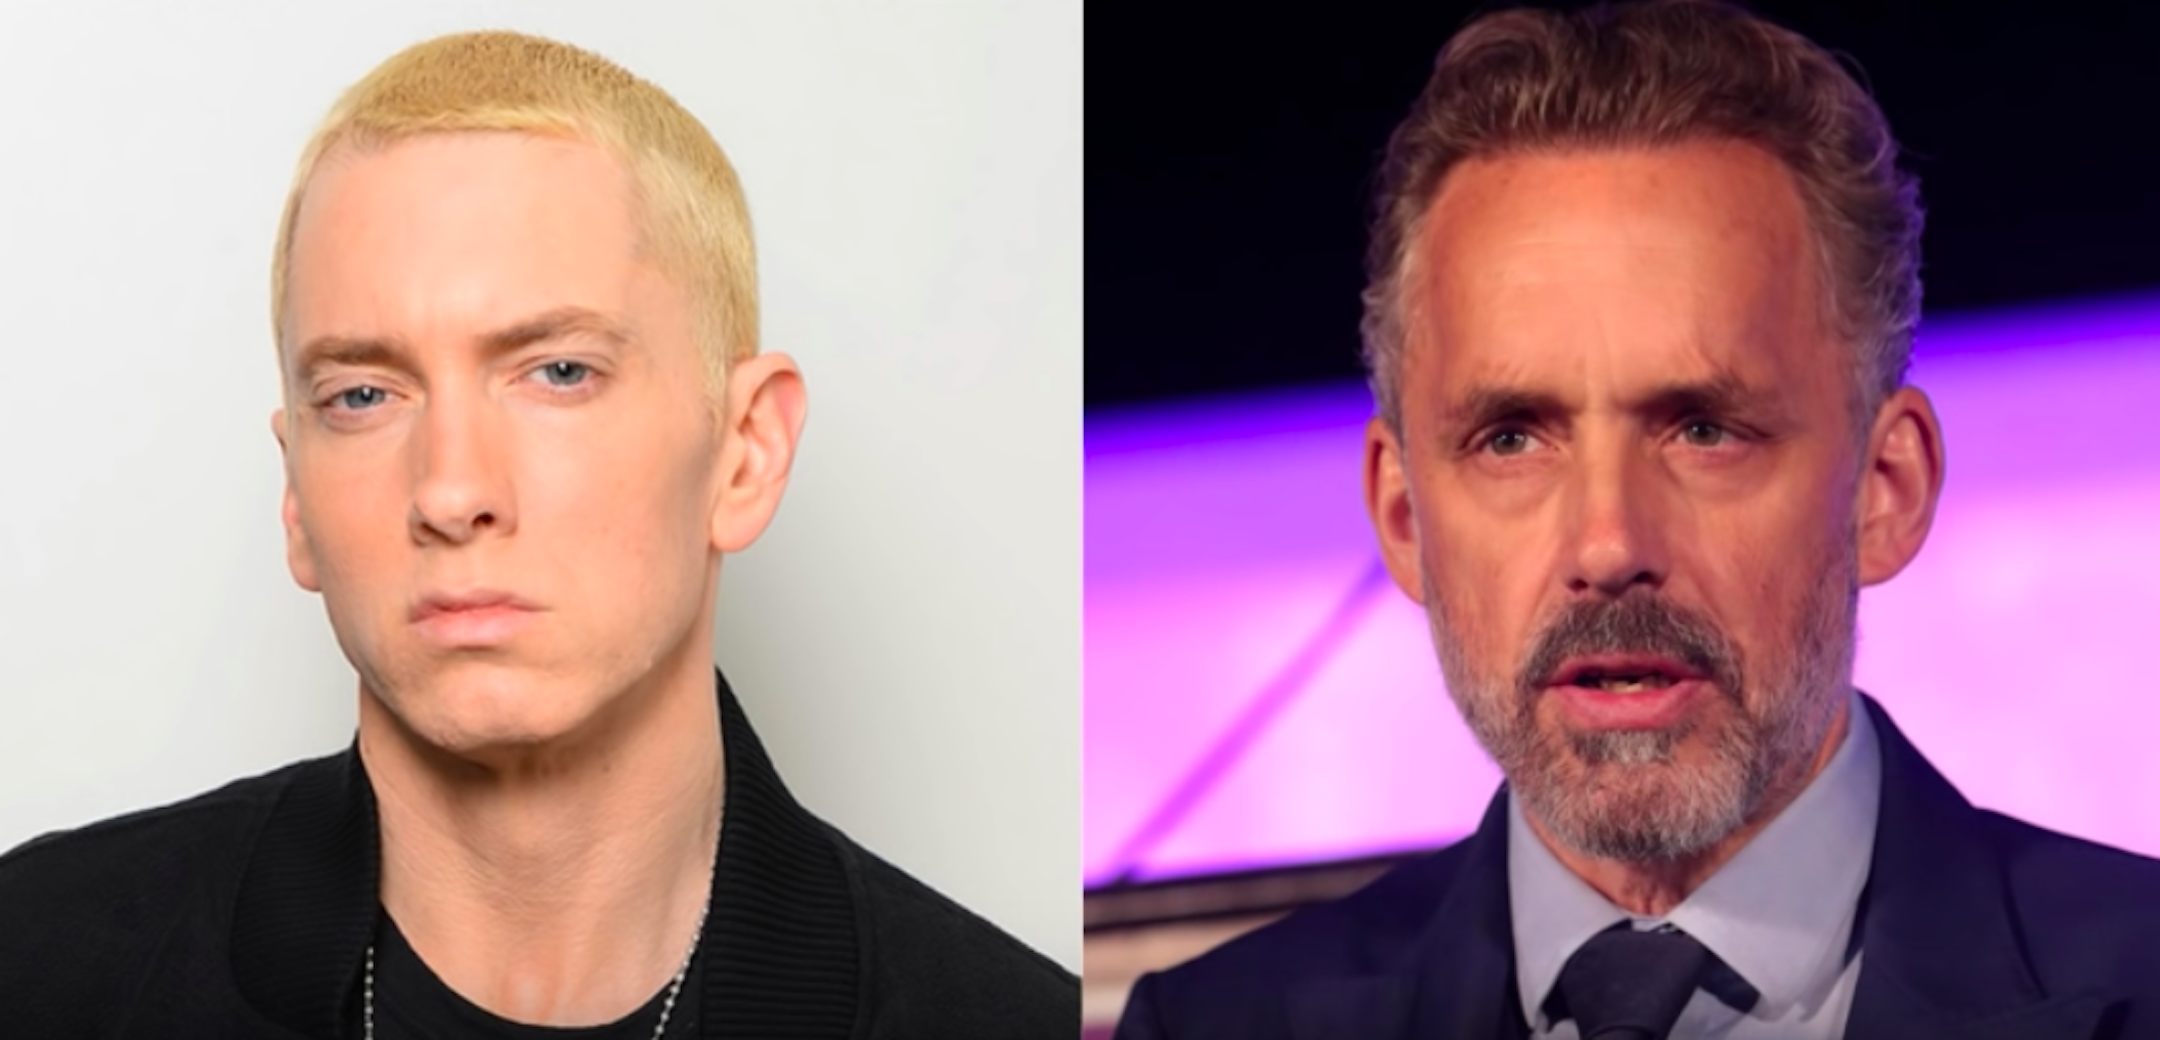 Getting The Eminem Haircut | TikTok